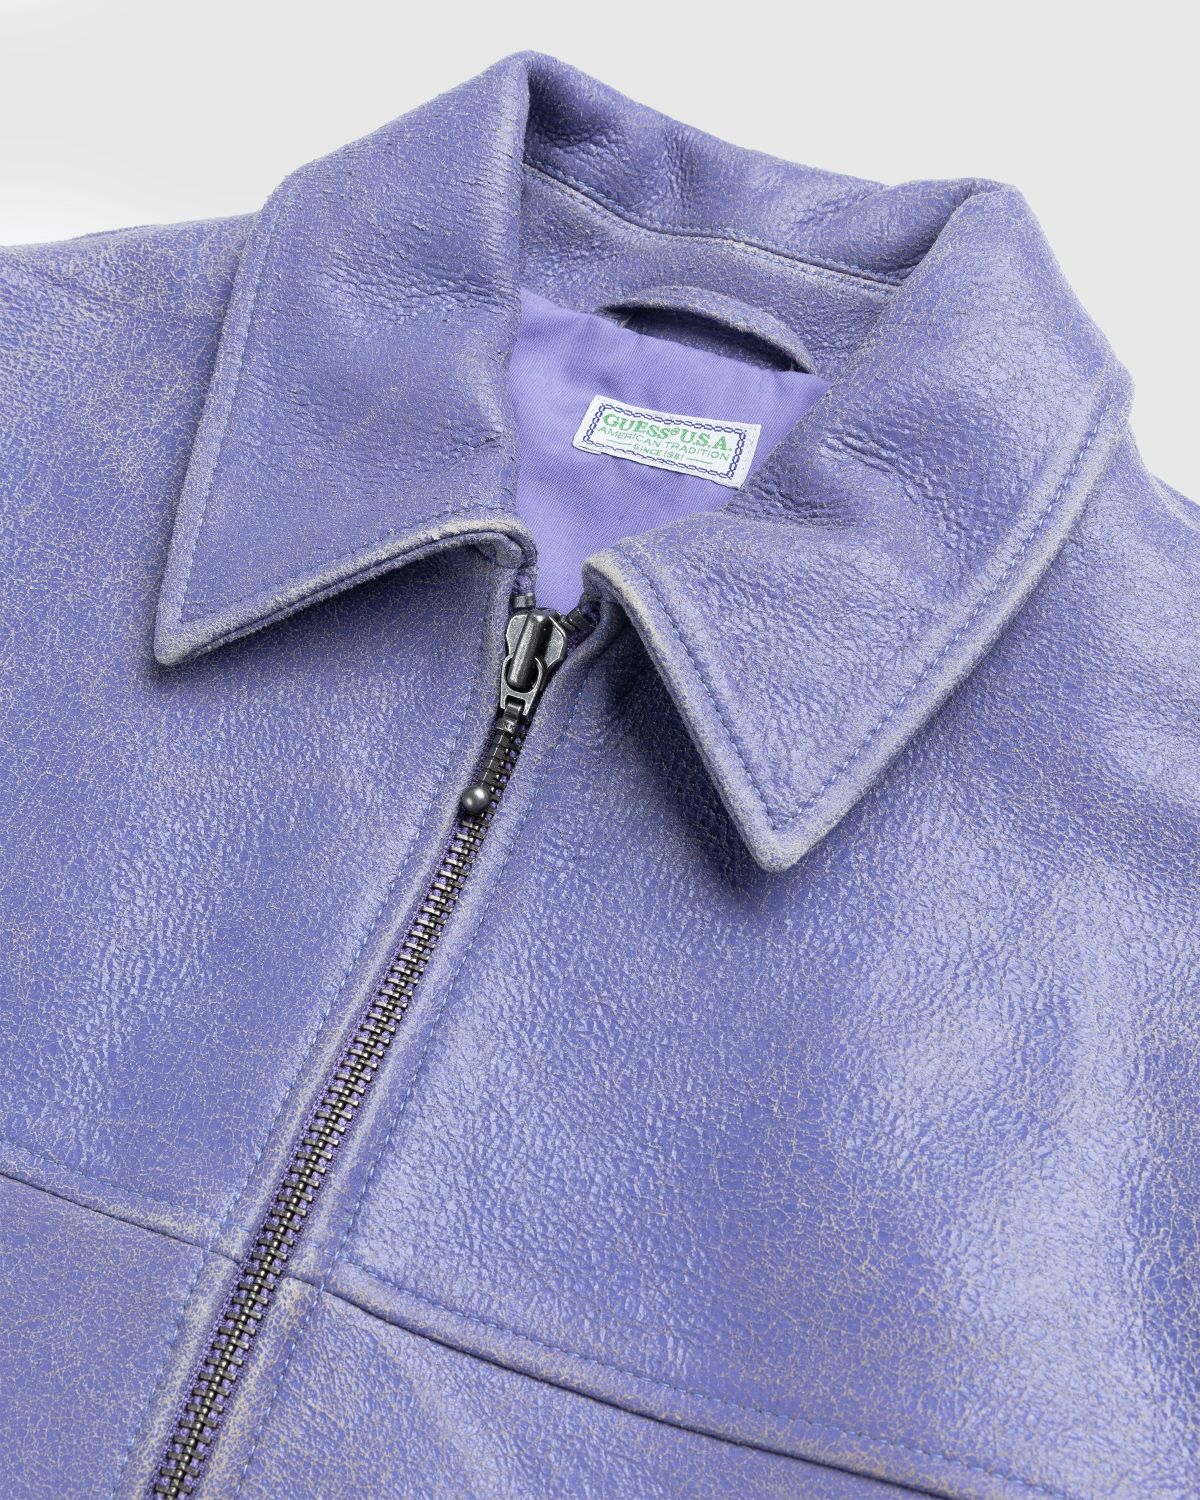 Guess USA – Crackle Leather Jacket Purple | Highsnobiety Shop